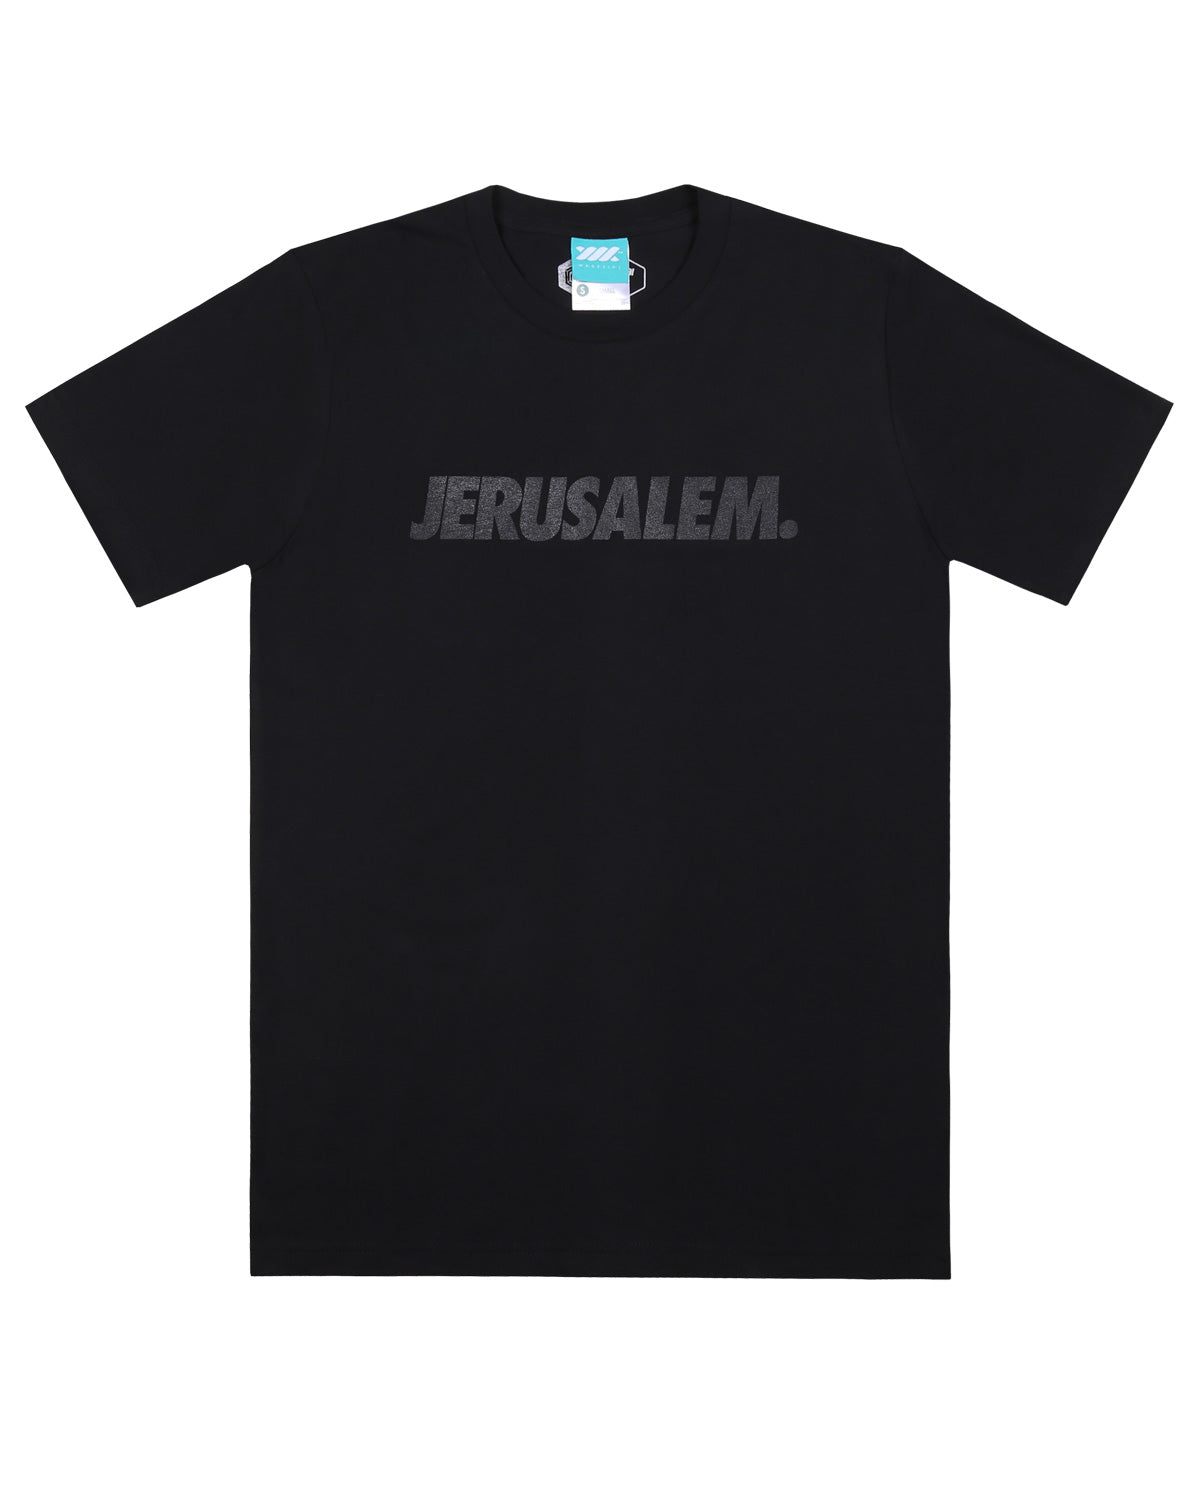 WADEZIG! T-SHIRT - JERUSALEM BLACK ON BLACK